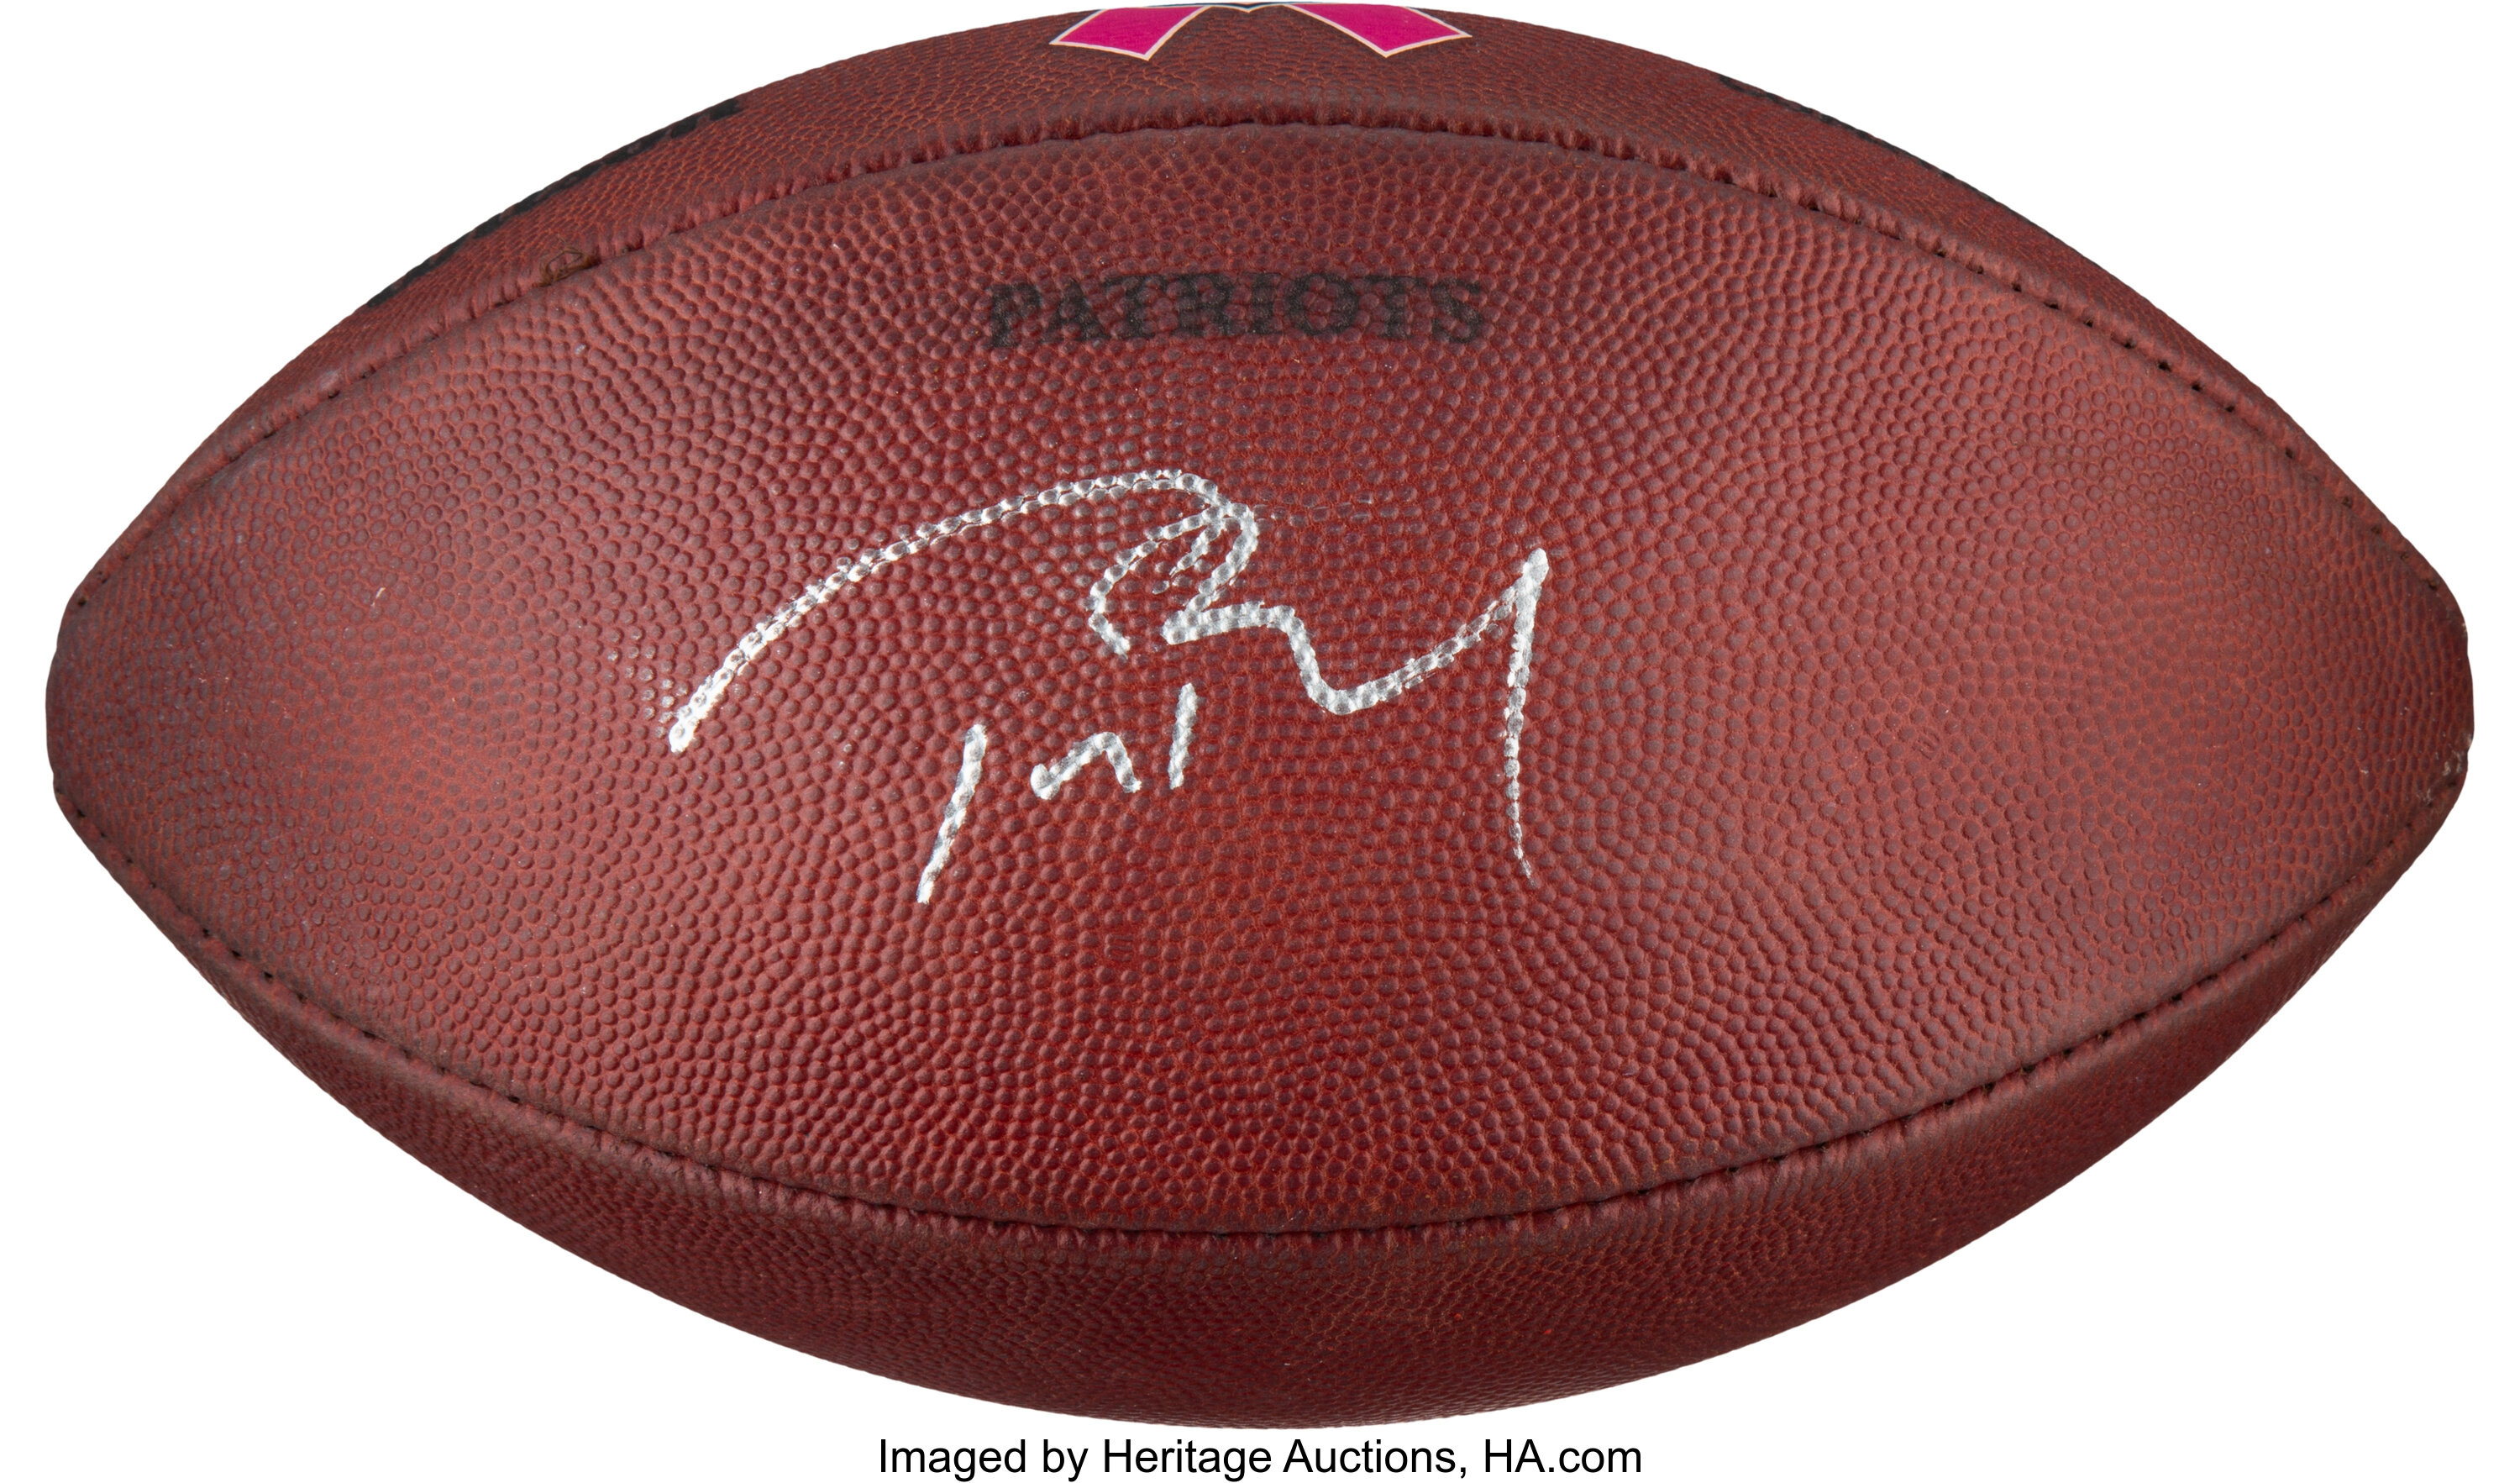 Tom Brady Signed Super Bowl XLIX Game-Used Football (PSA COA